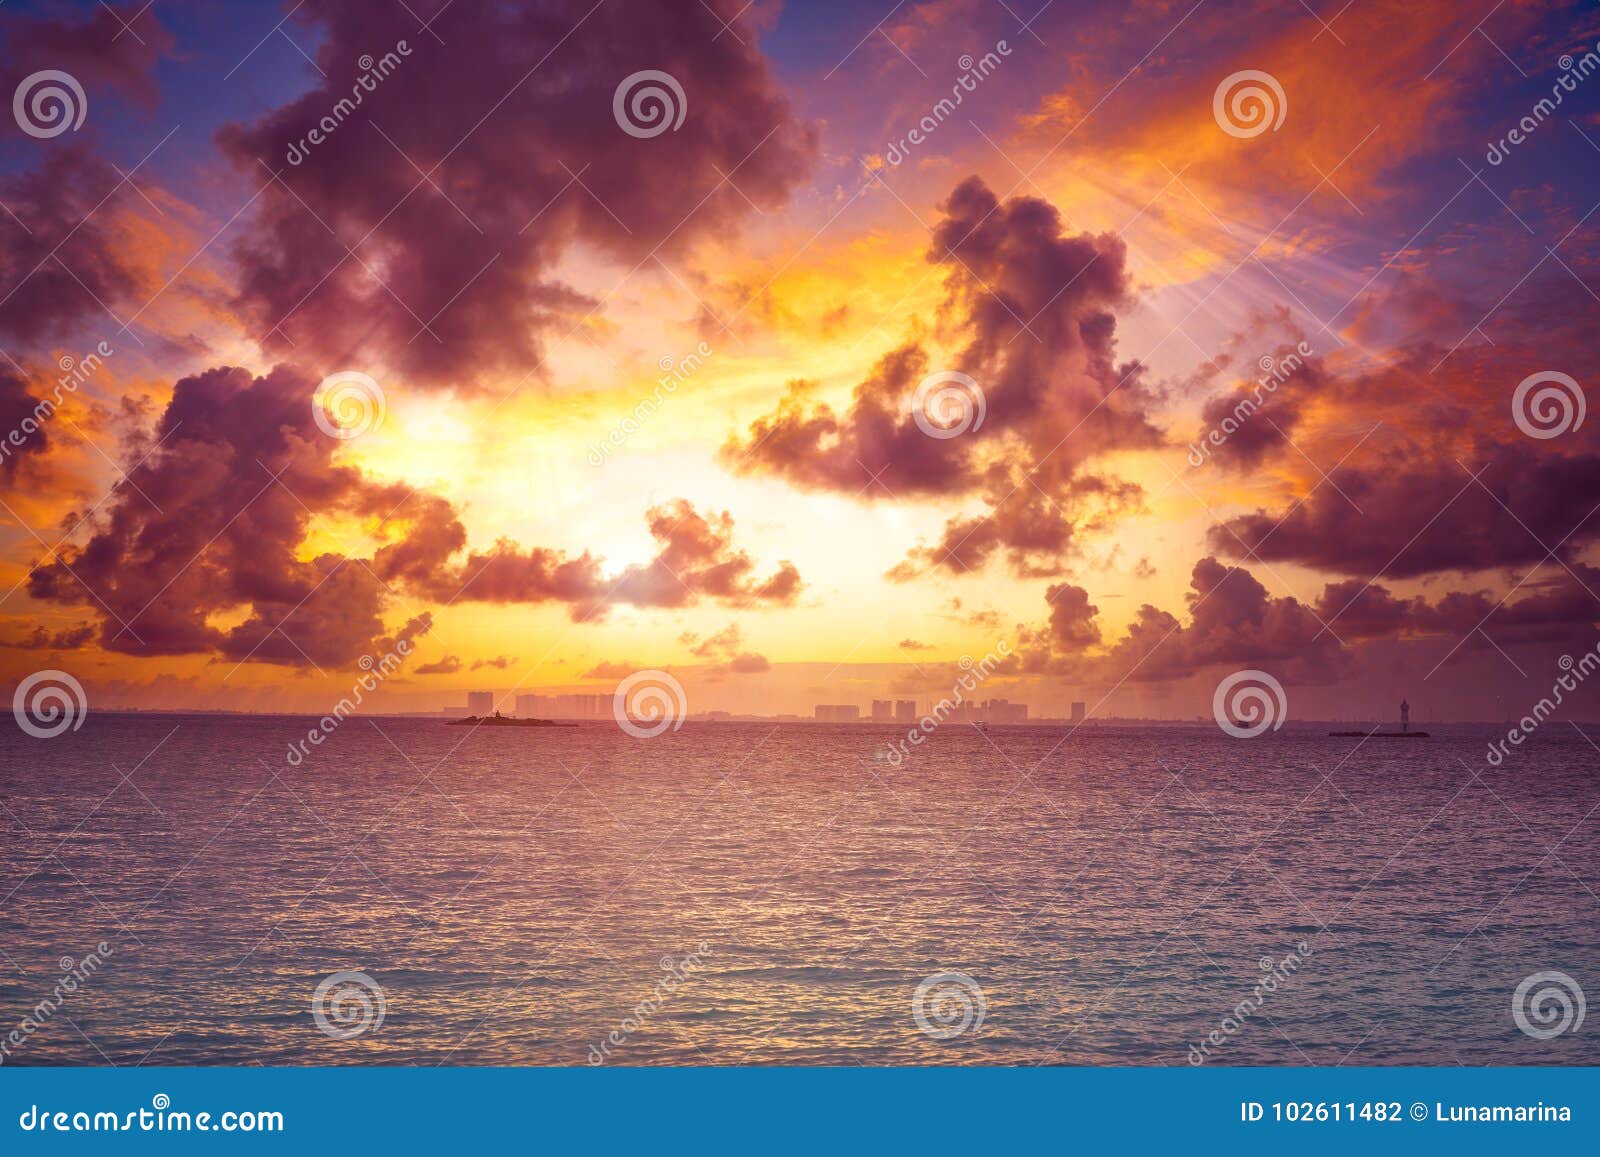 isla mujeres island caribbean beach sunset